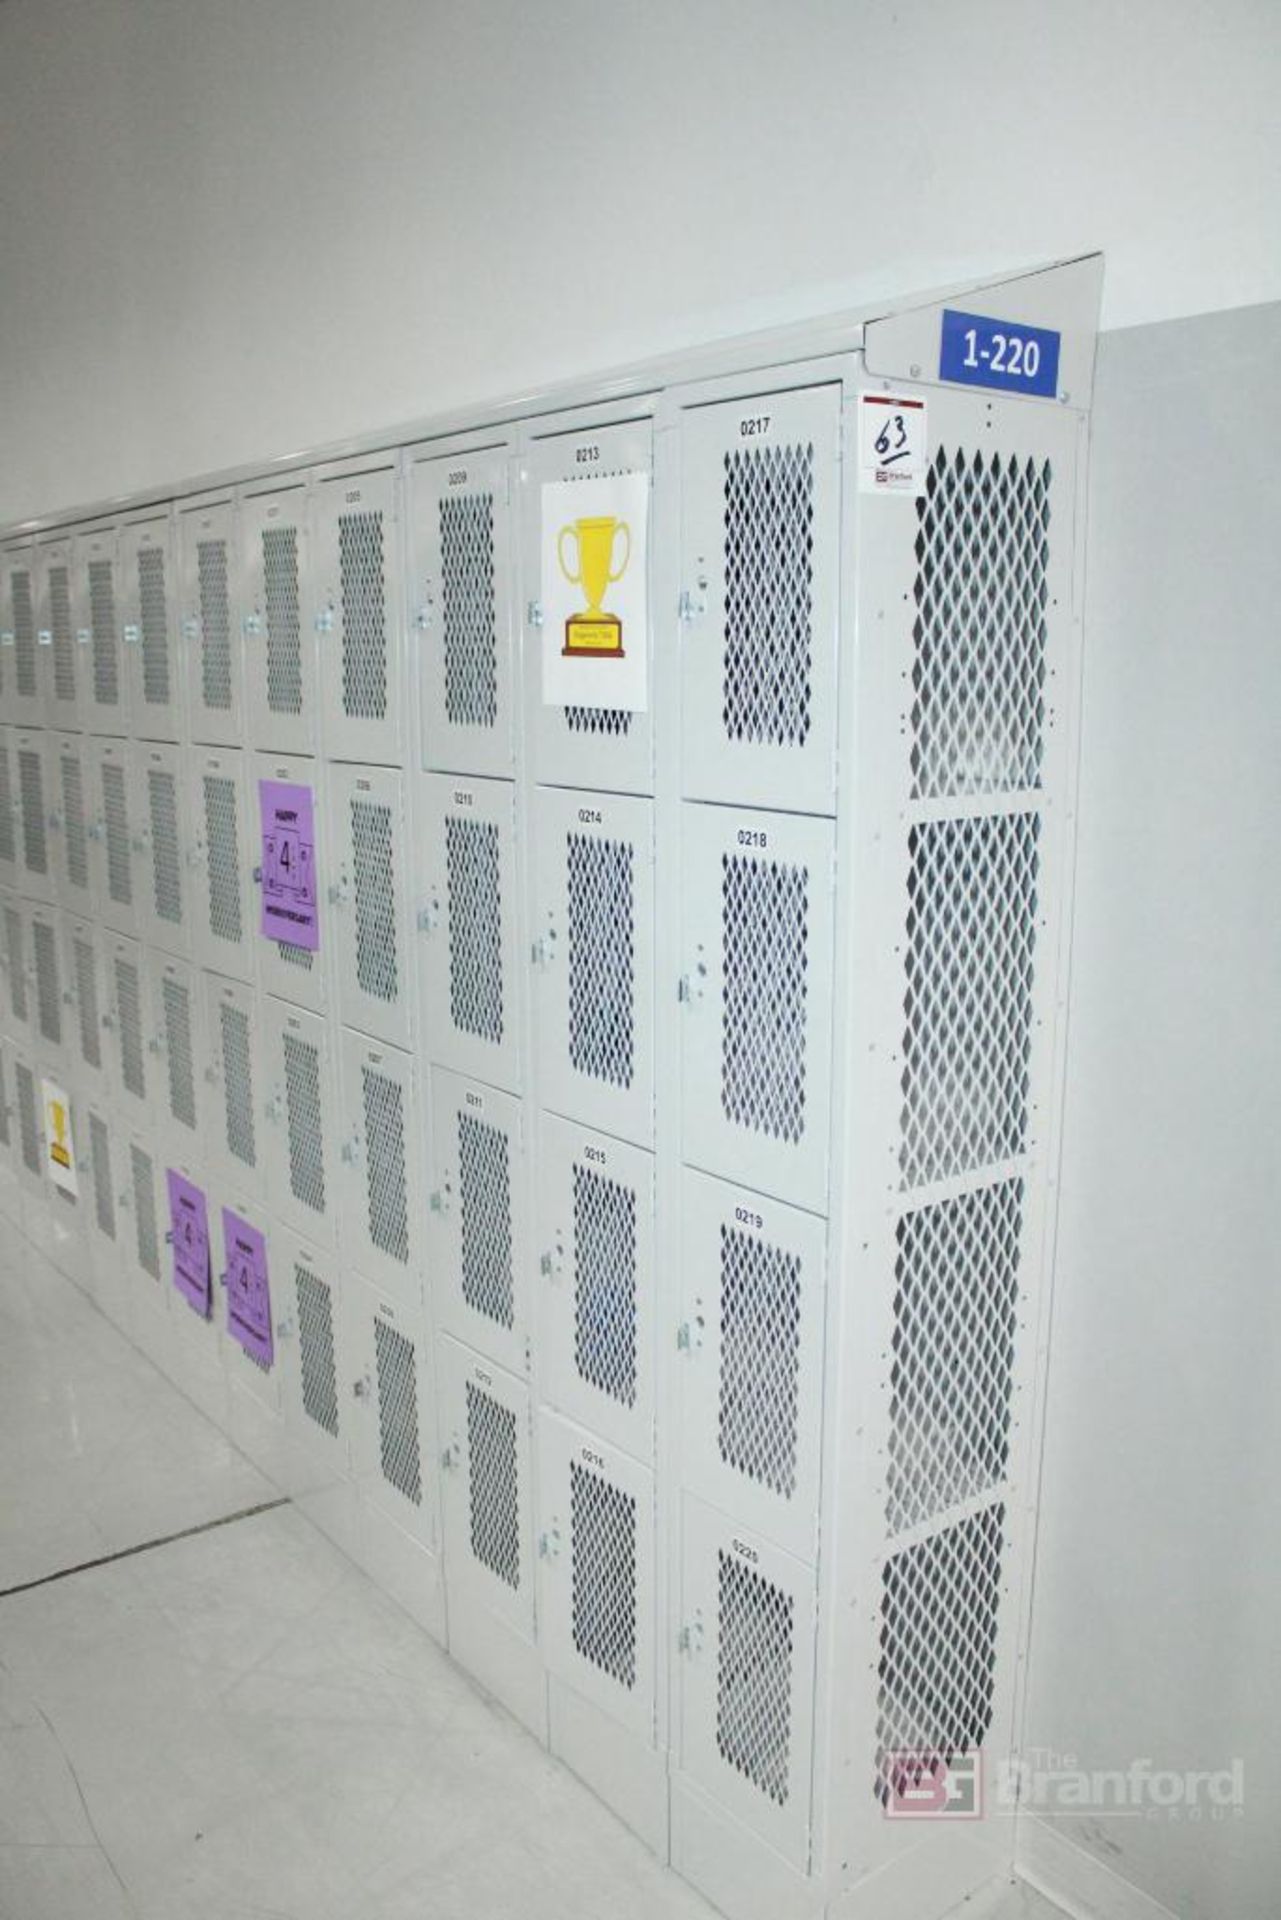 Lockers, Numbered 1-220